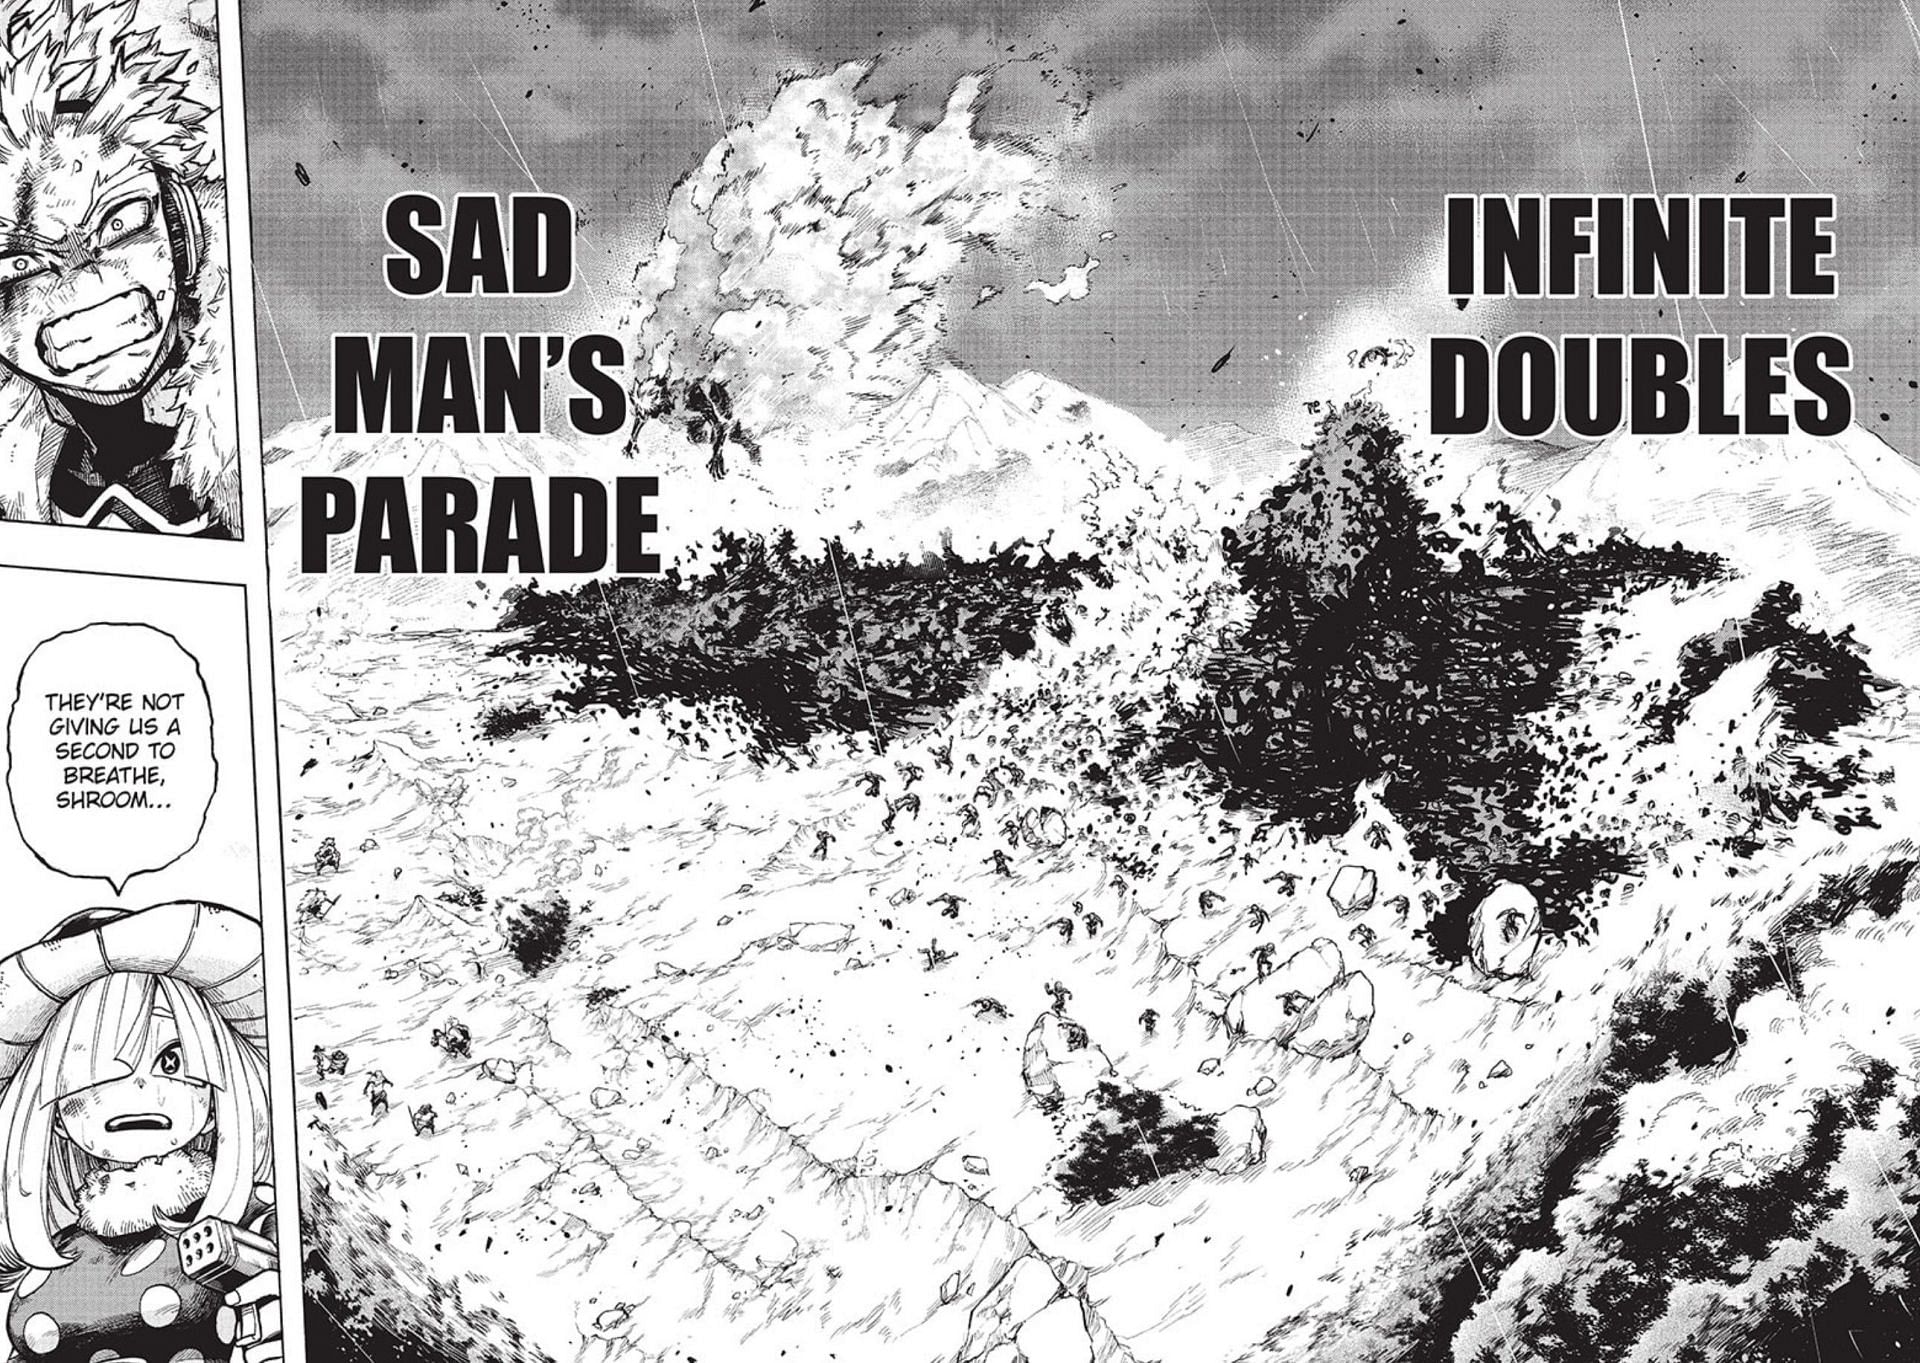 Sad Man's Parade is supposed to continue in My Hero Academia chapter 376 (Image via Kohei Horikoshi/Shueisha)